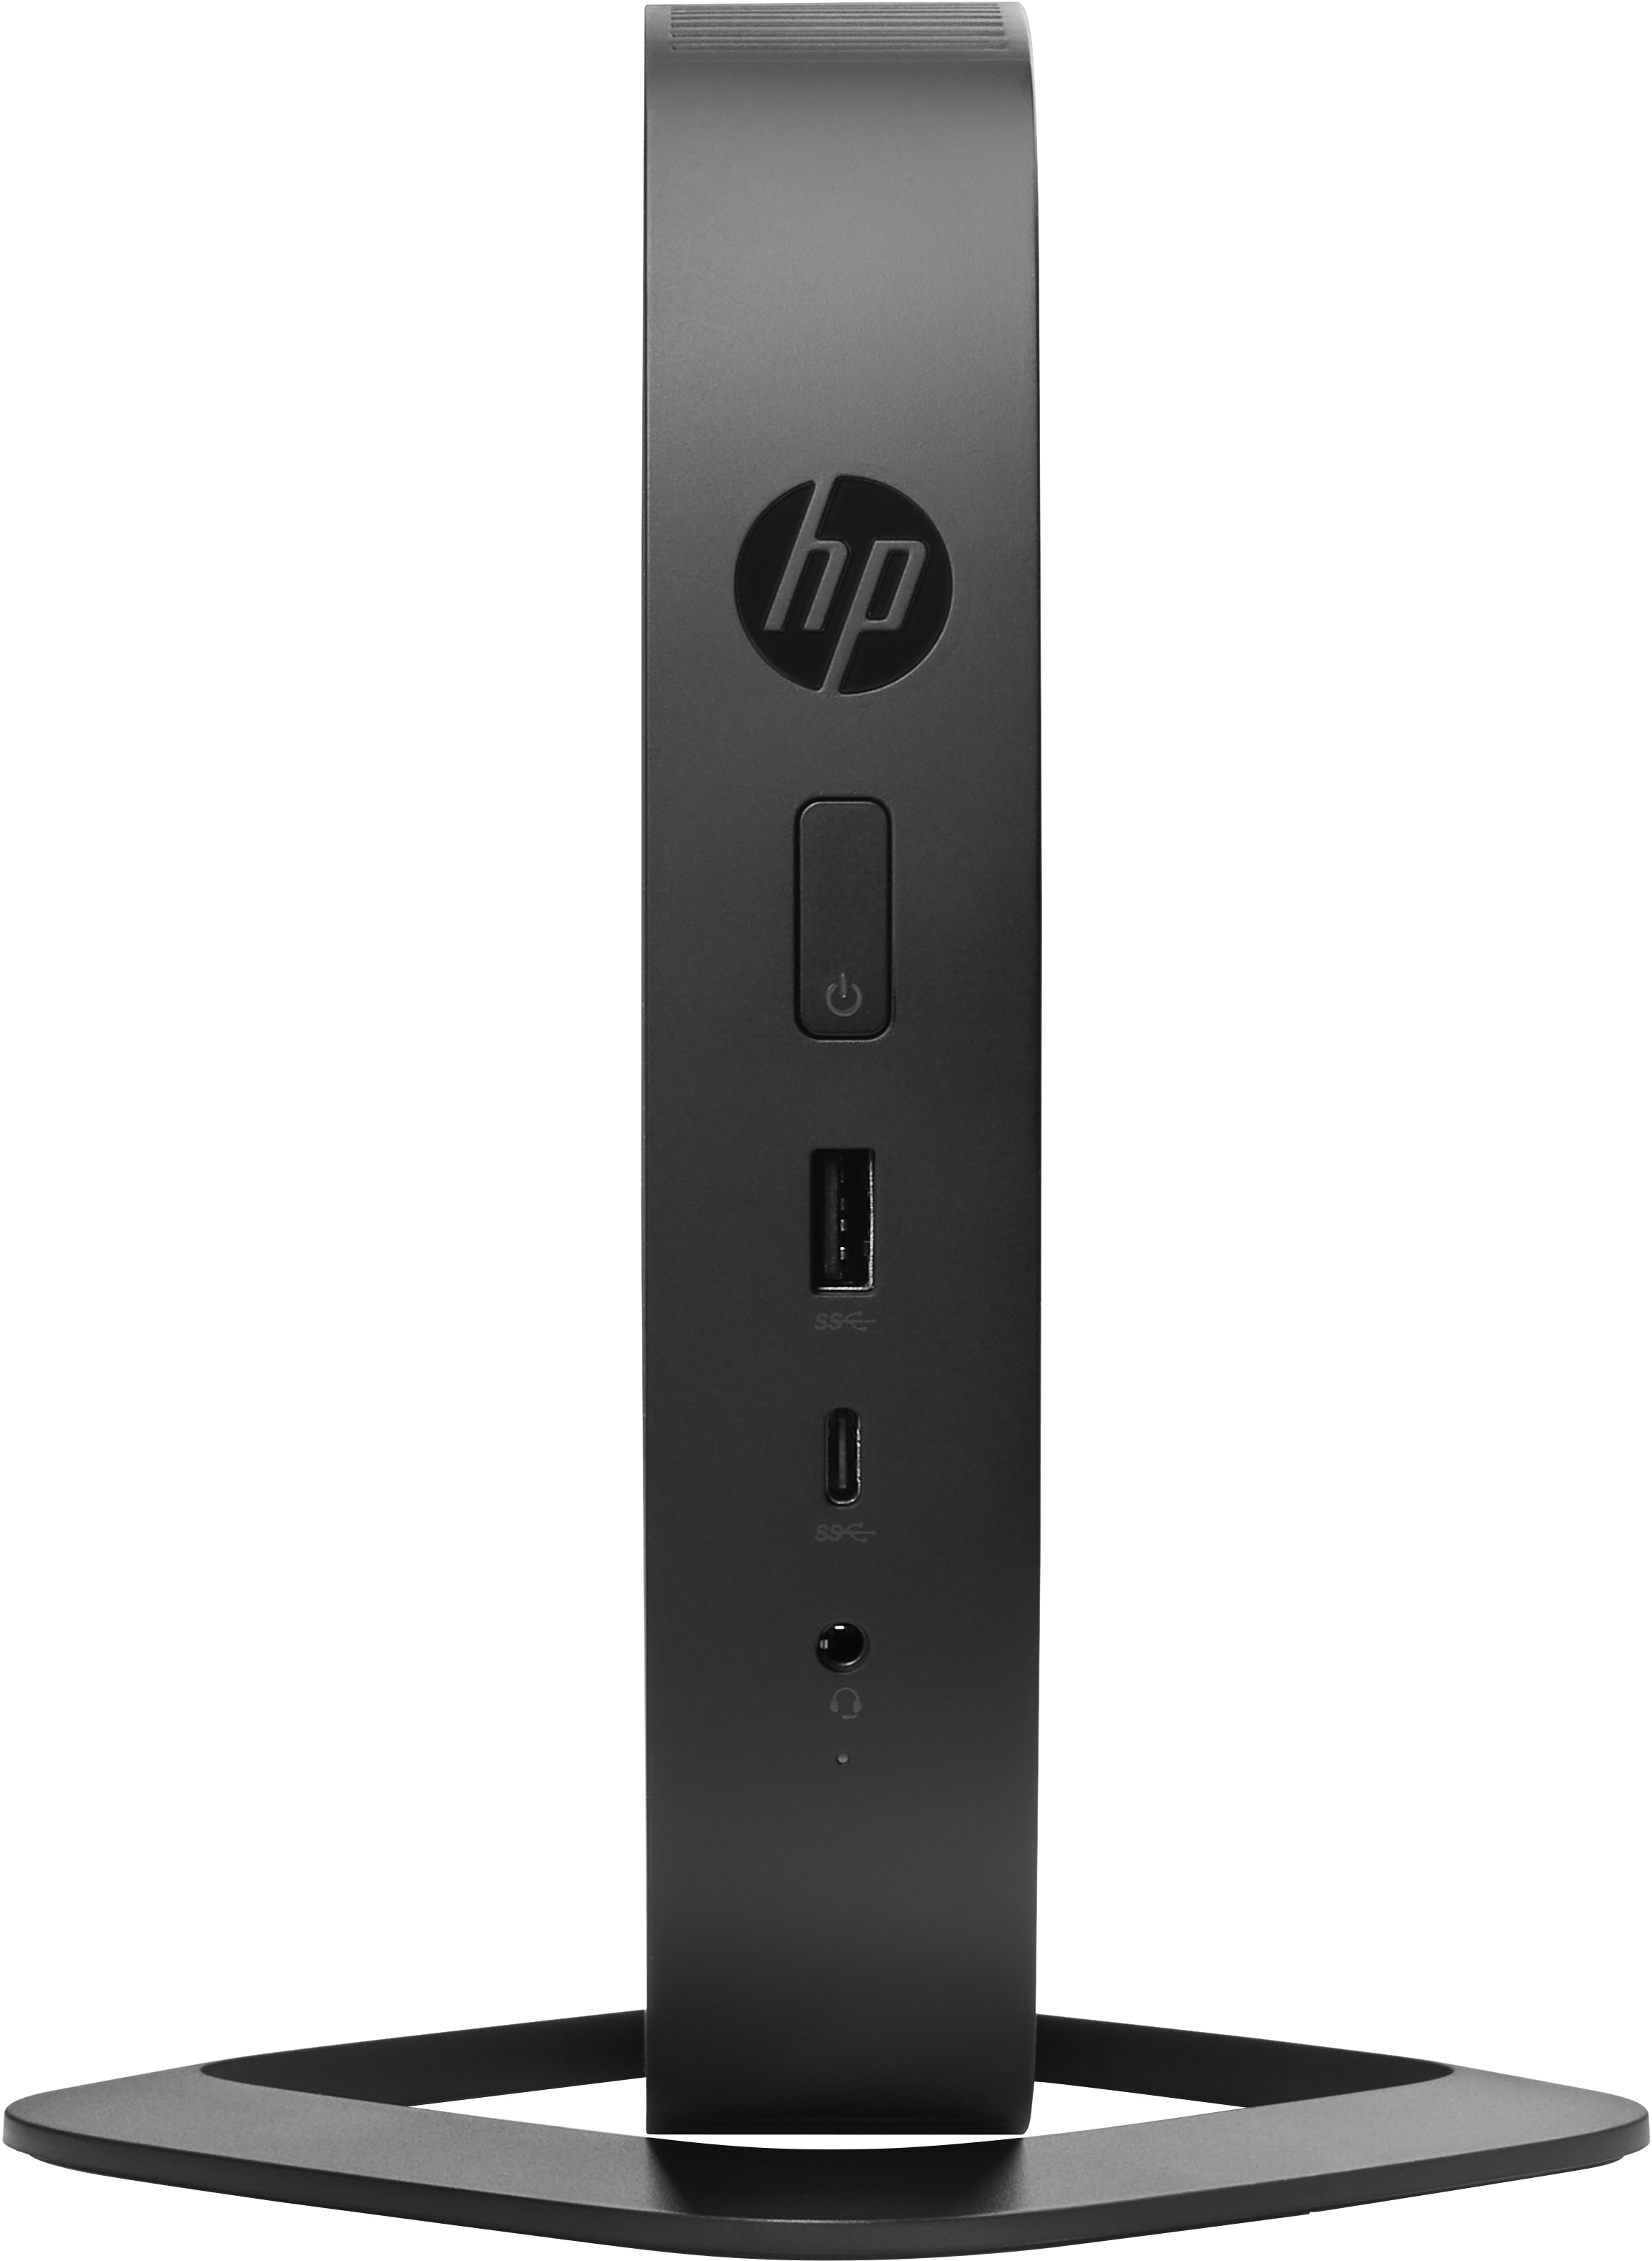 HP t530 - Thin client - tower - 1 x GX-215JJ 1.5 GHz - RAM 4 GB - flash 8 GB - MLC - Radeon R2E - GigE - HP Smart Zero Core - monitor: none - keyboard: US